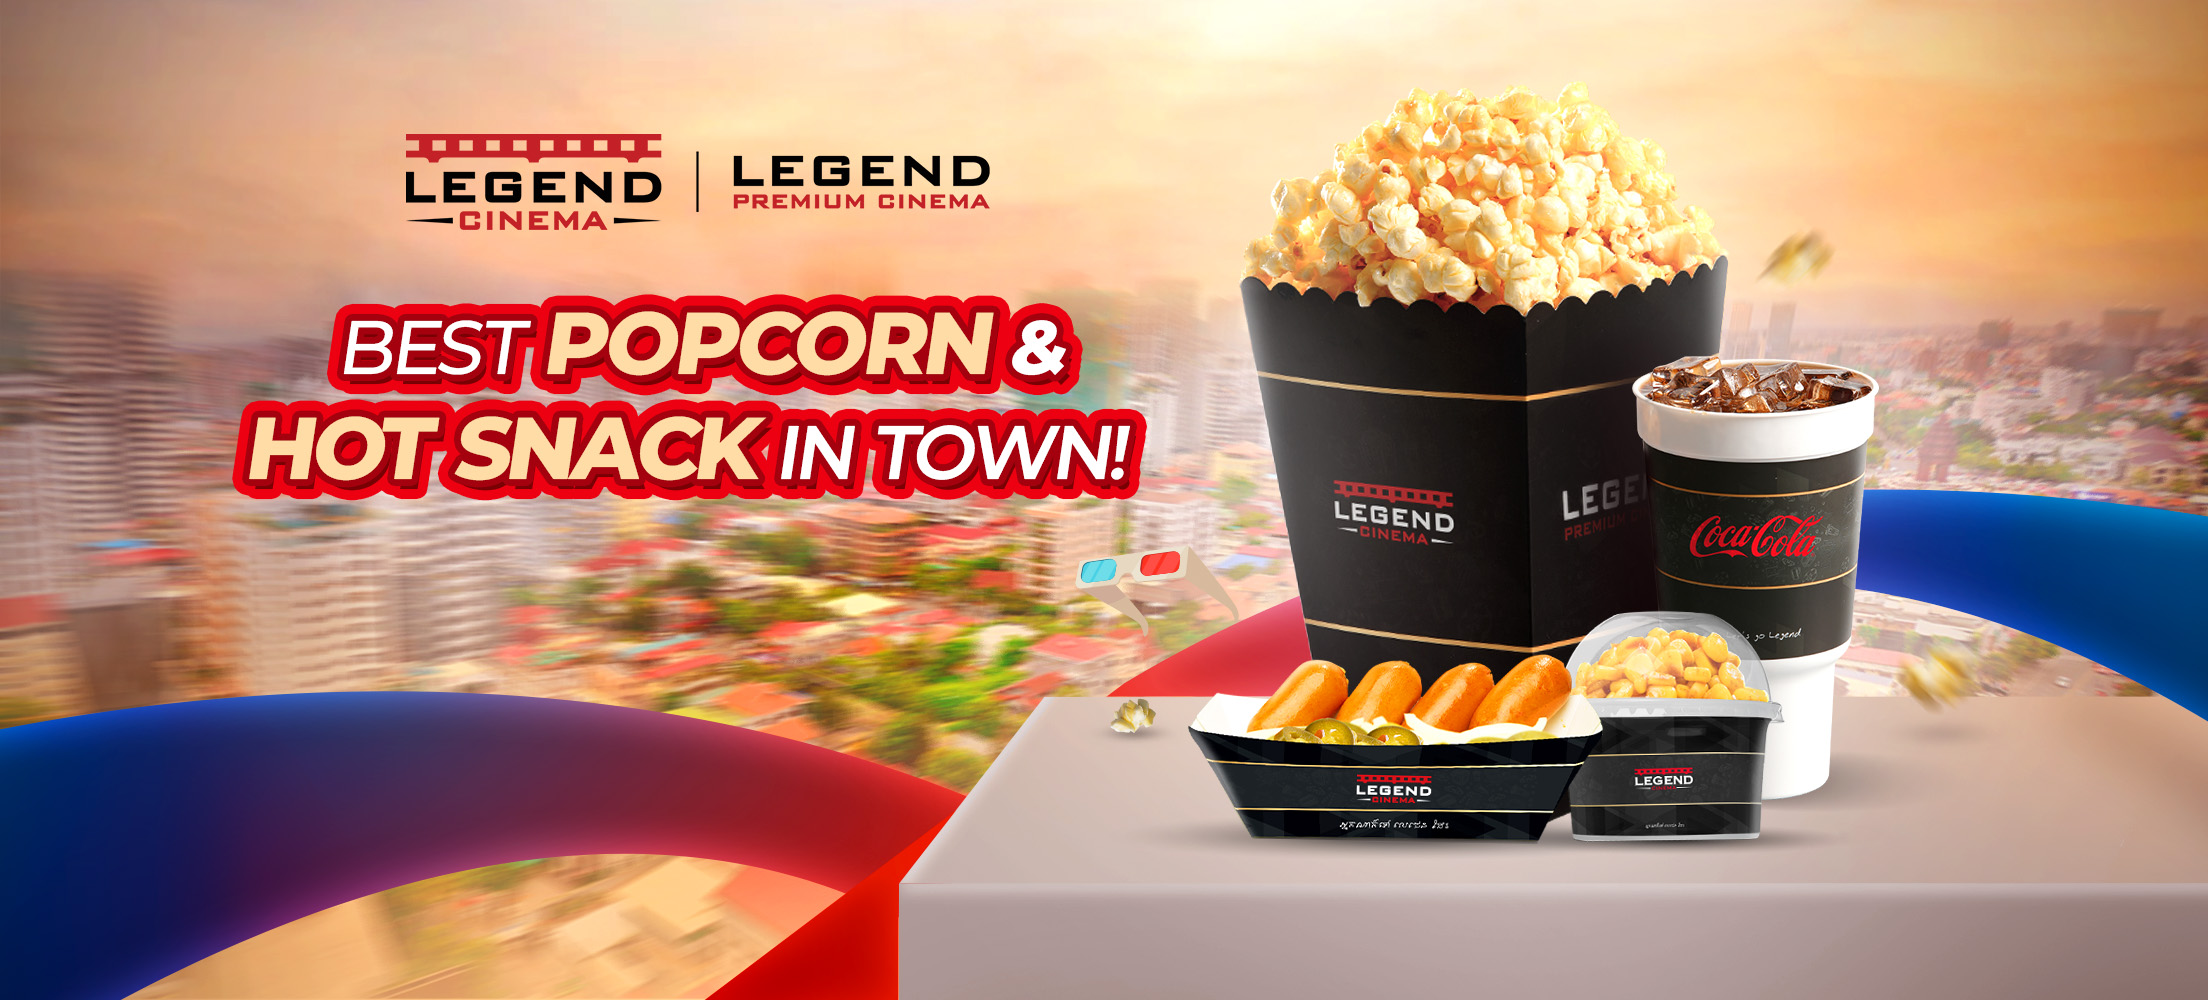 Best Popcorn & Hot Snack in Town (Web Banner).jpg